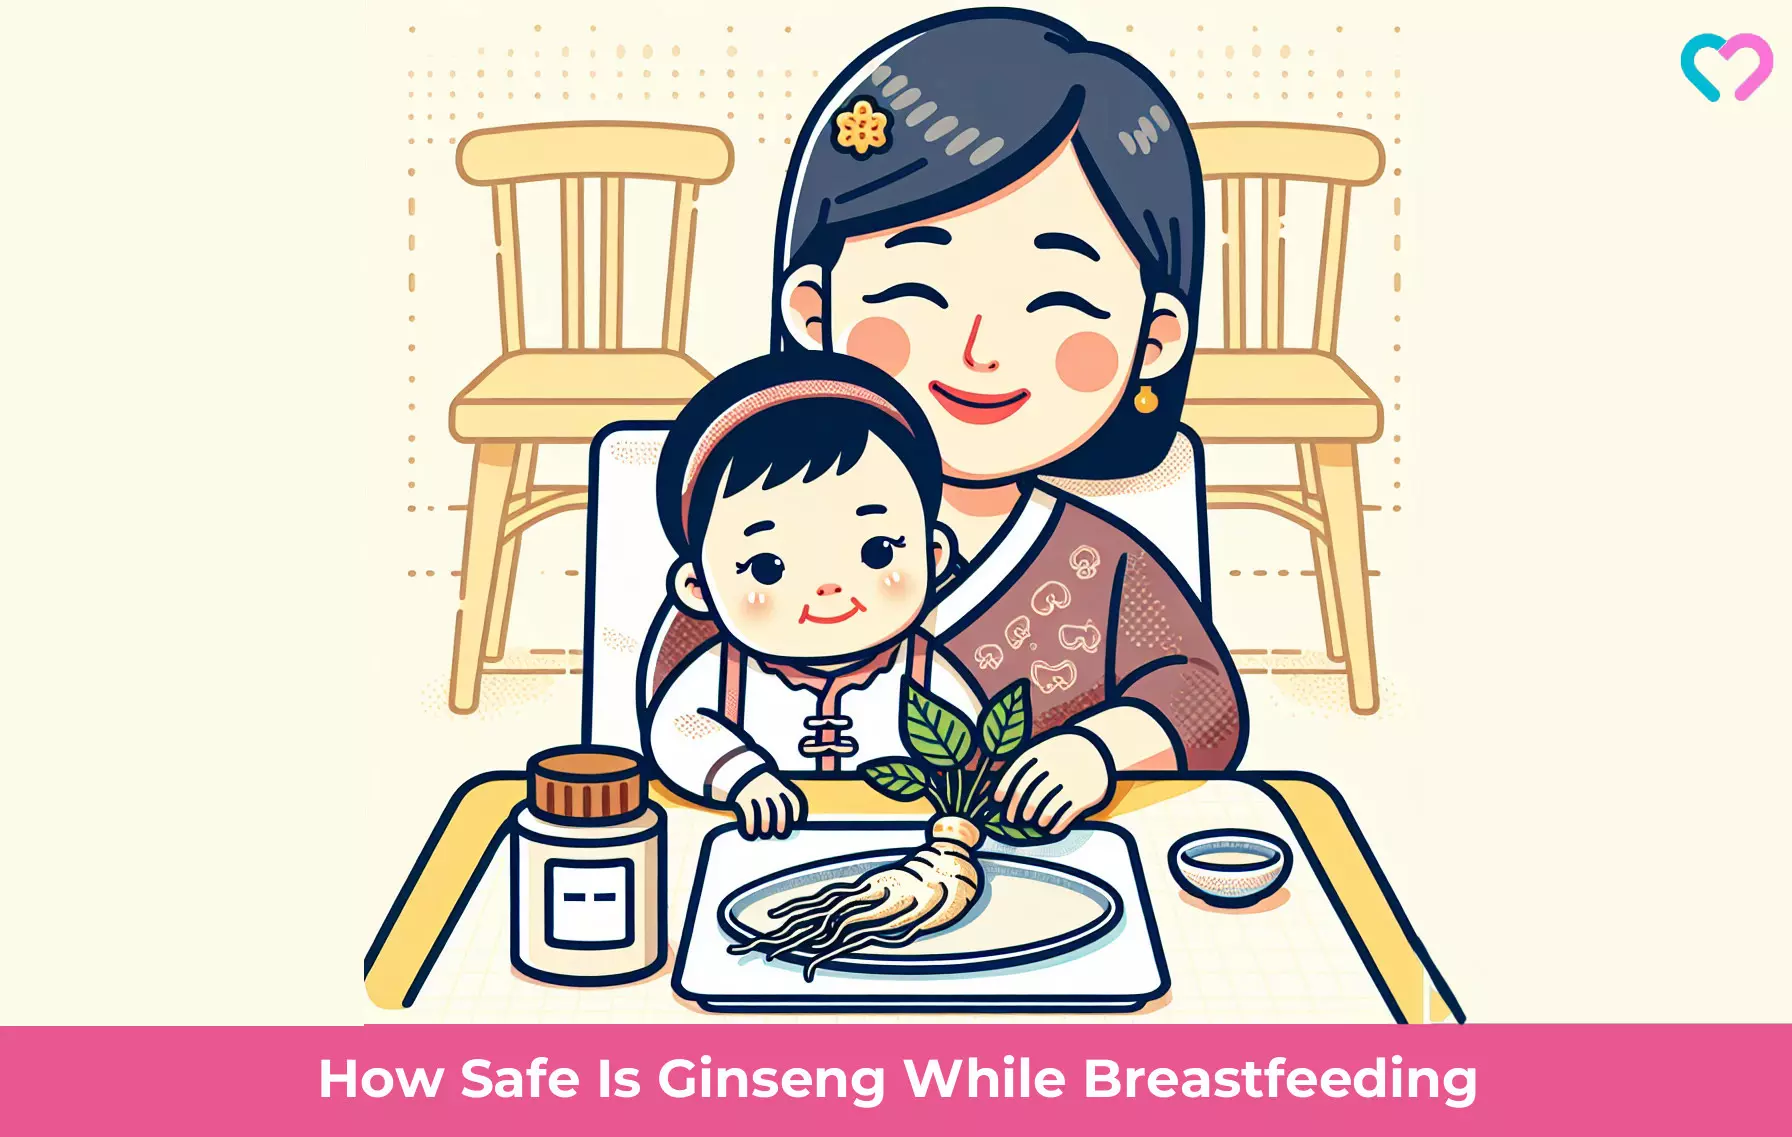 Ginseng While Breastfeeding_illustration